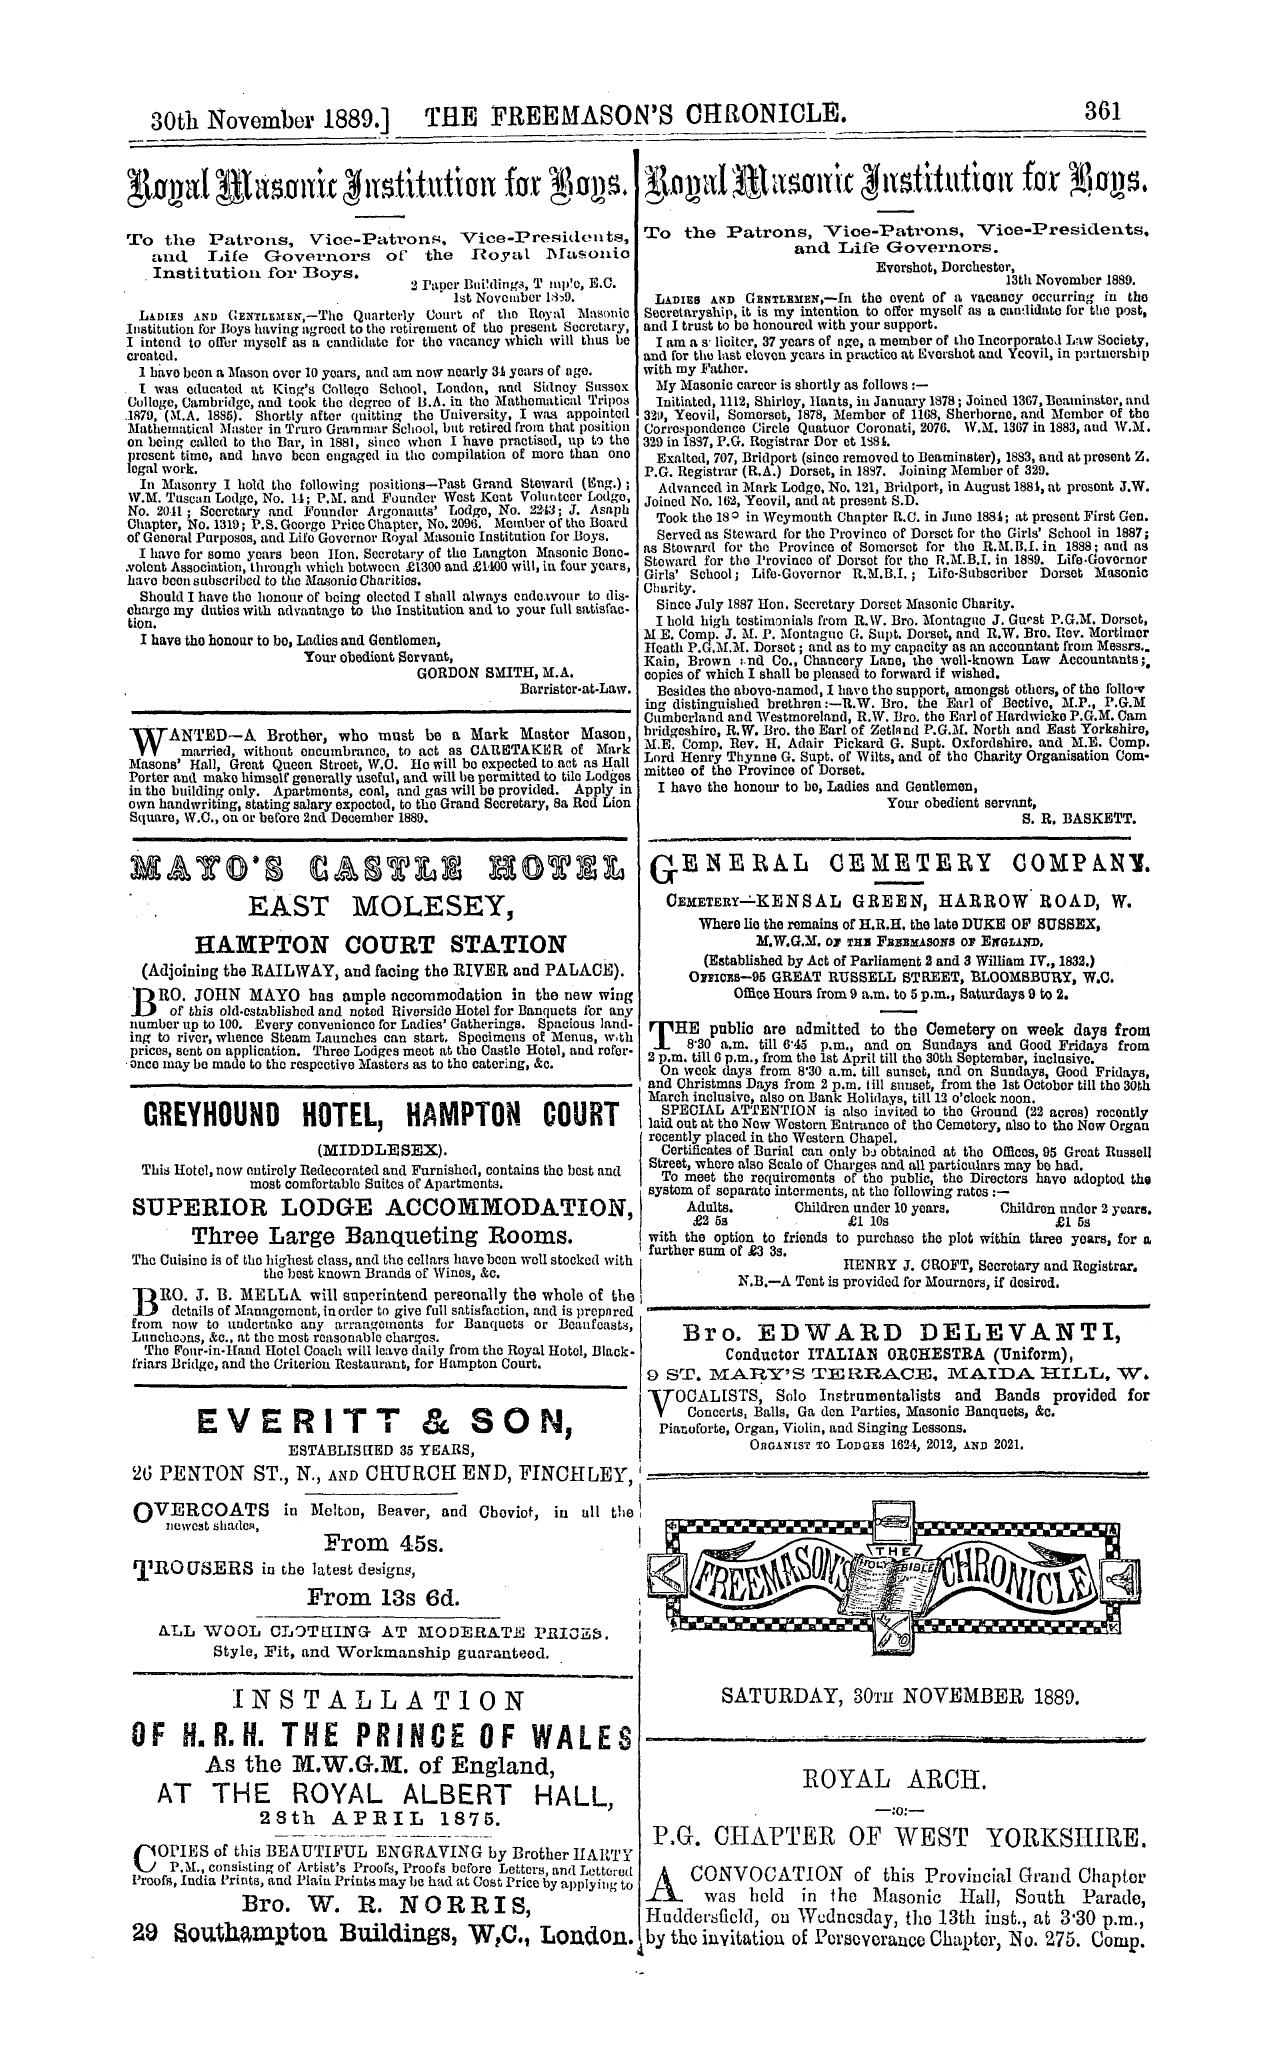 The Freemason's Chronicle: 1889-11-30 - Royal Arch.